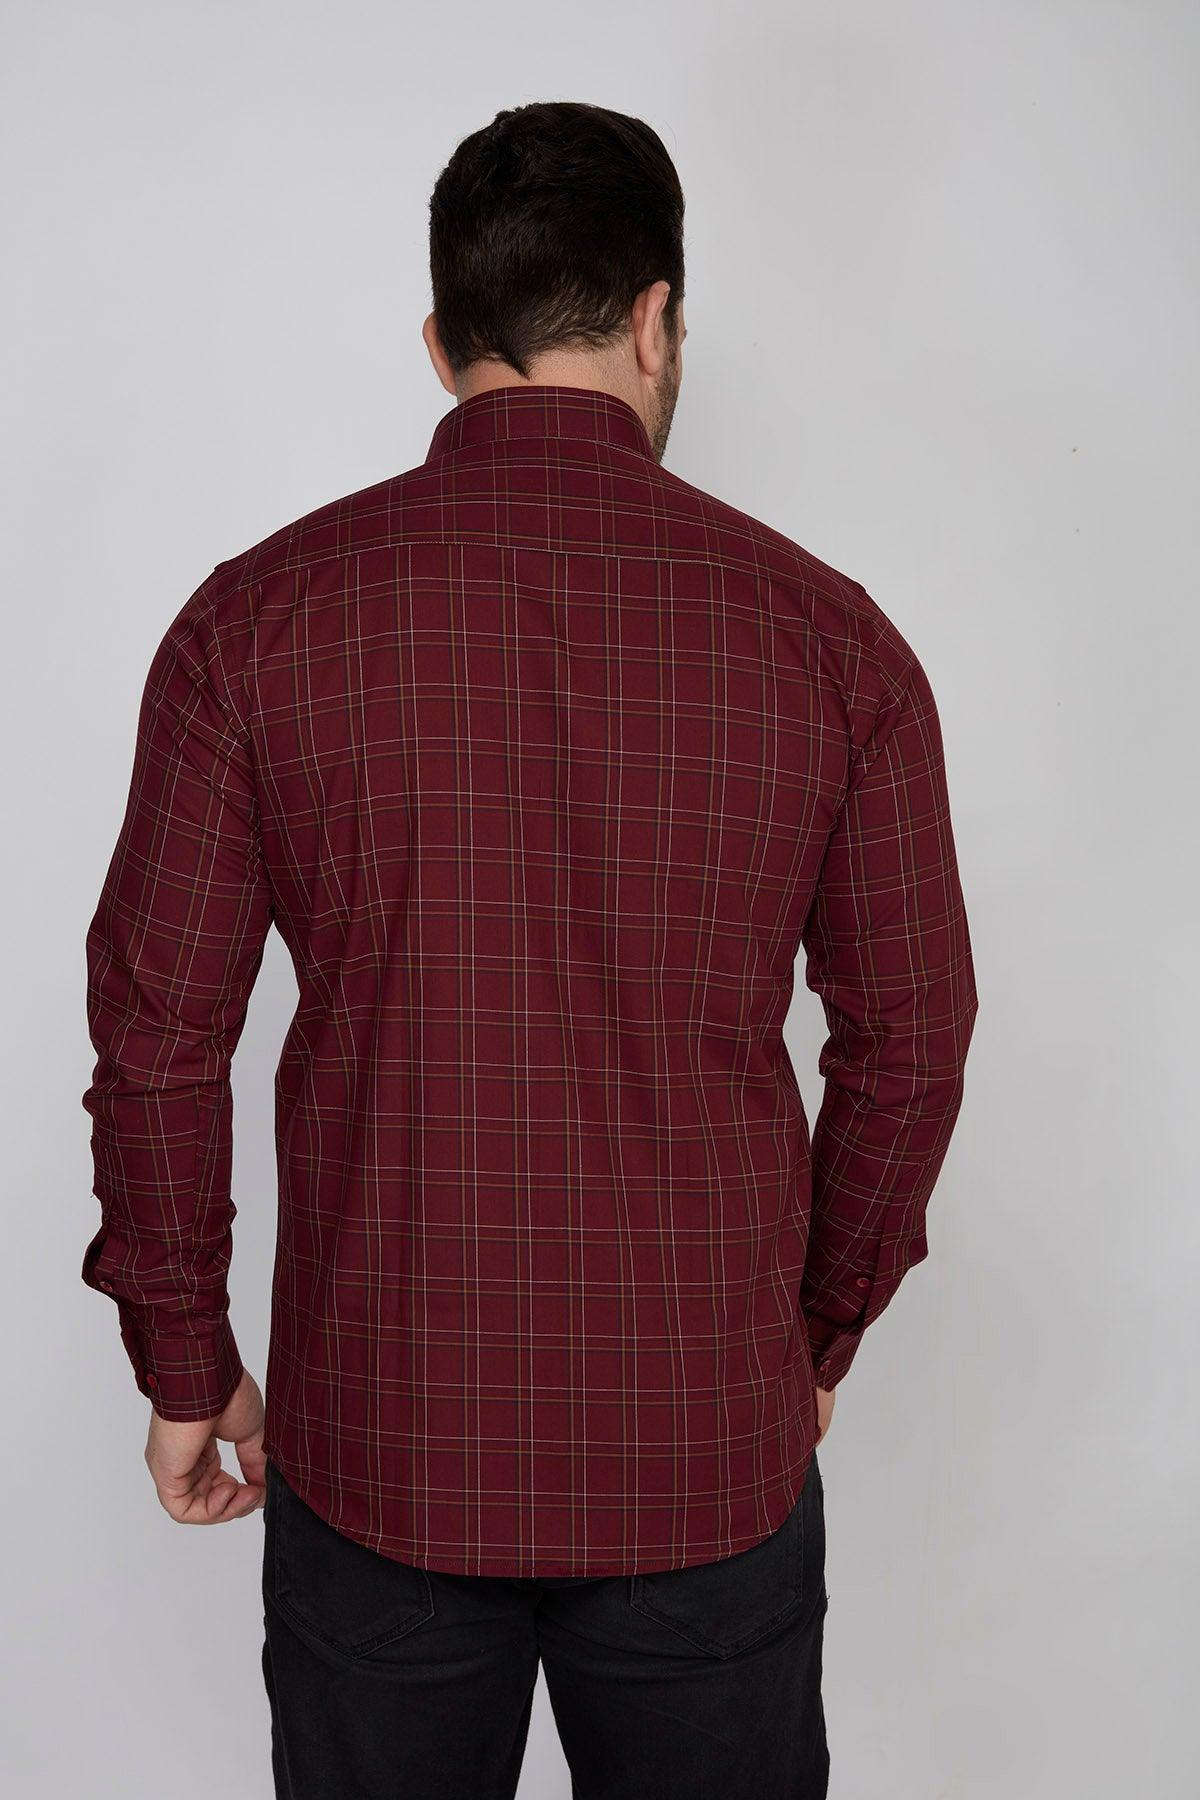 Bangor - Checkered slim fit shirt - John Watson